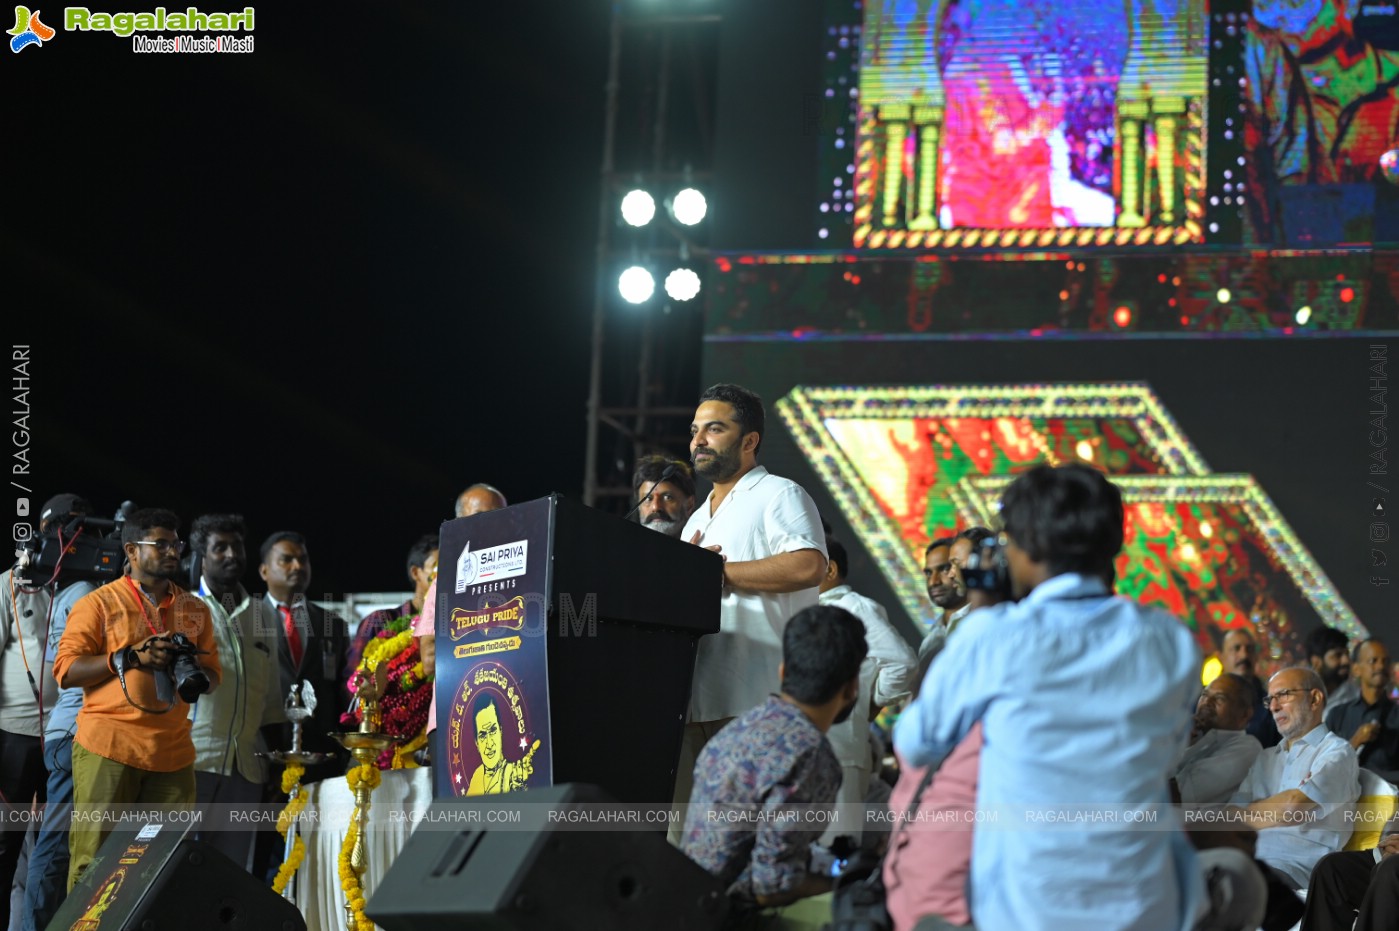 NTR Shatajayanthi Utsavalu Event in Hyderabad